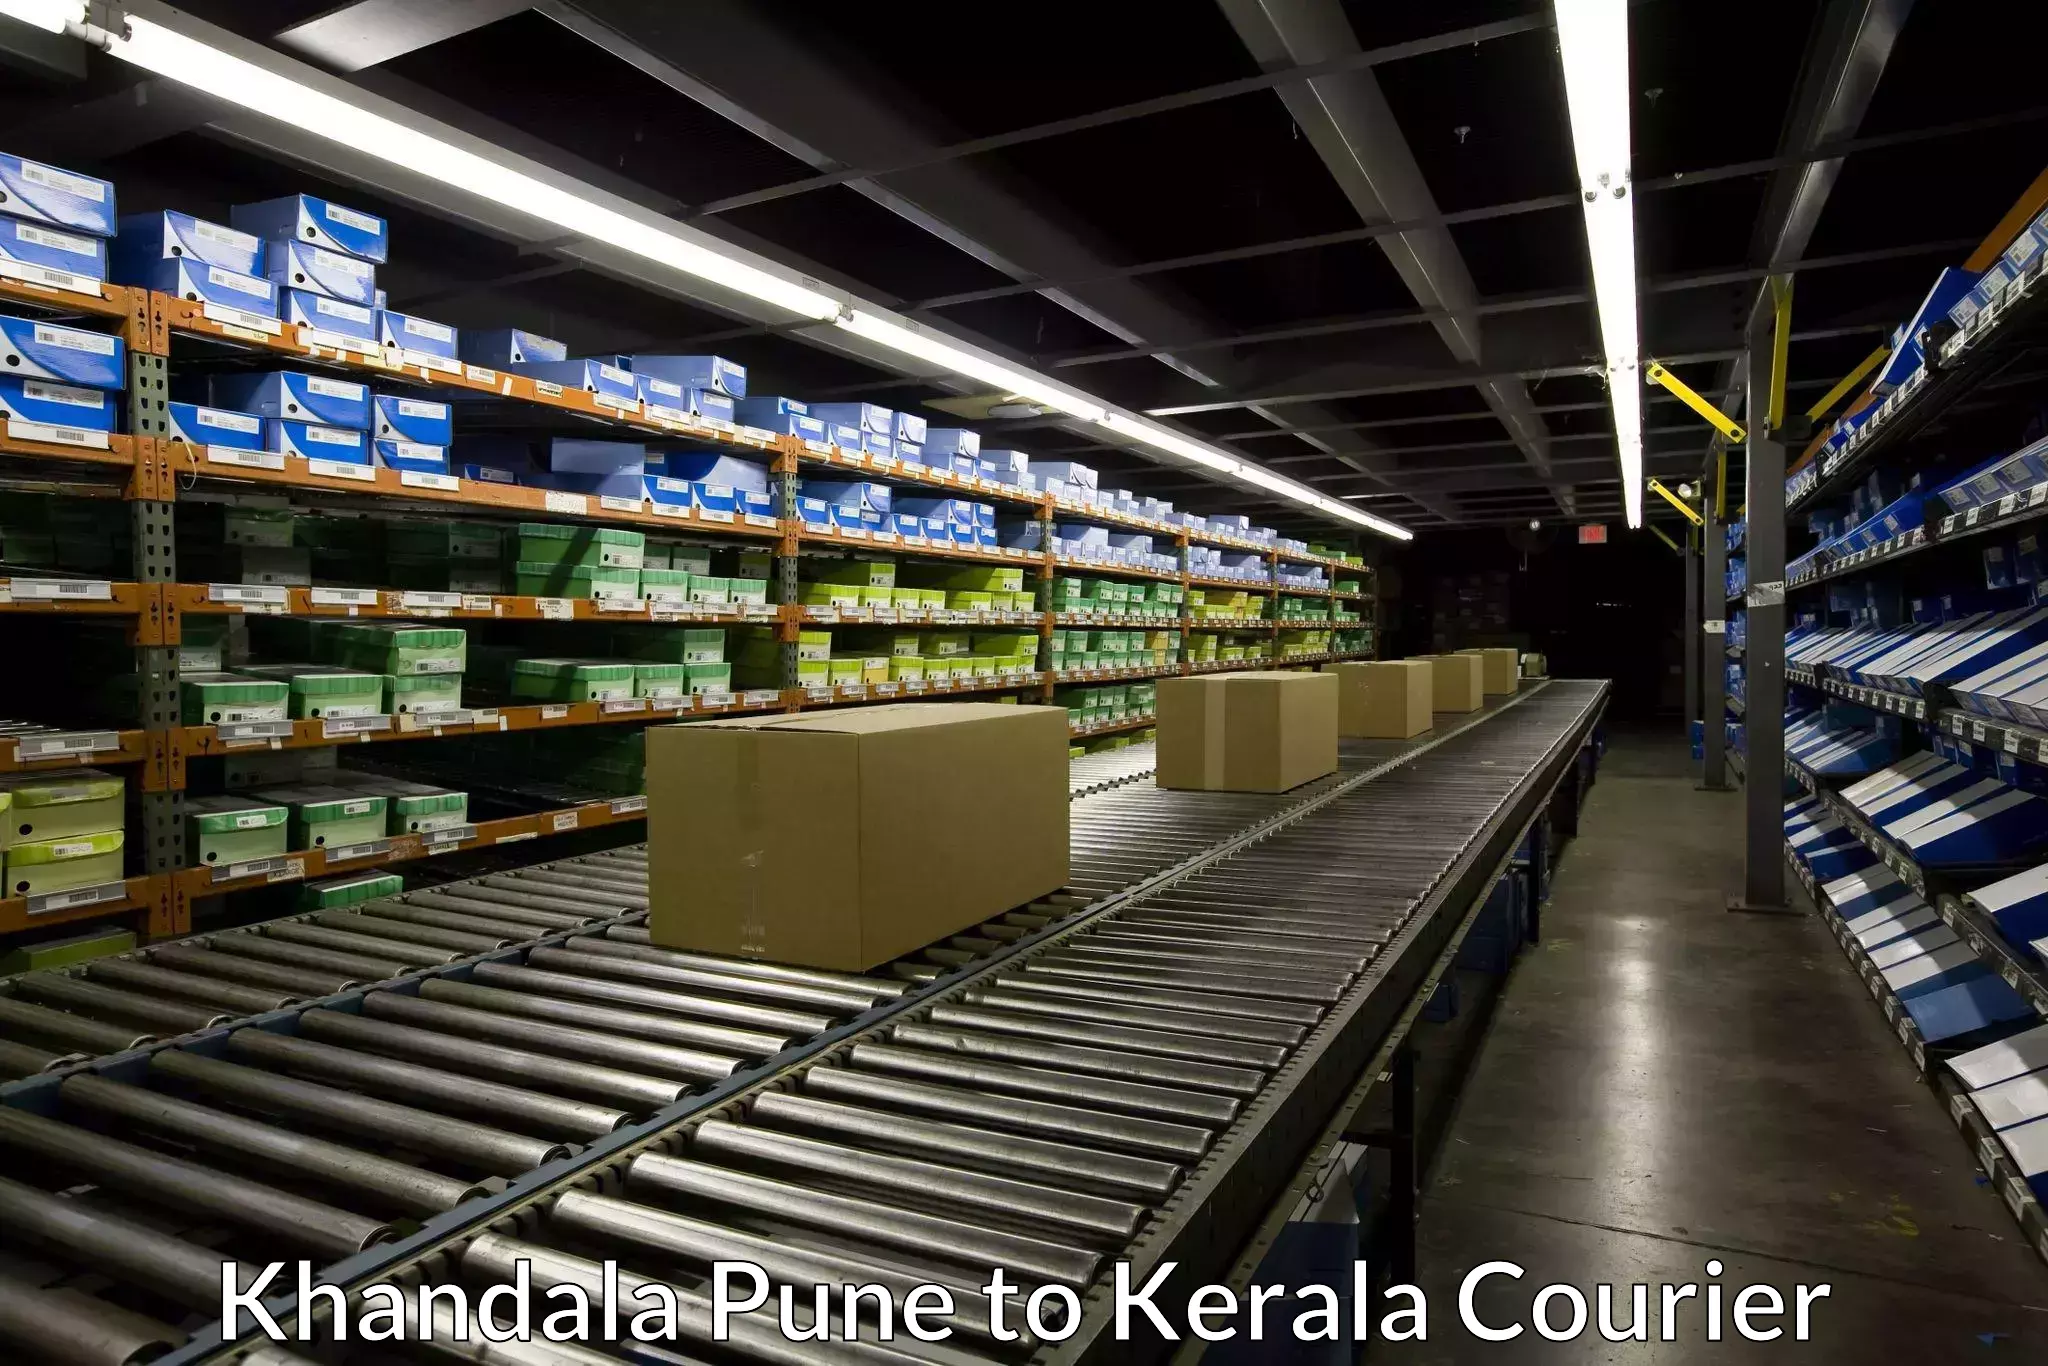 Courier service partnerships Khandala Pune to Cochin Port Kochi